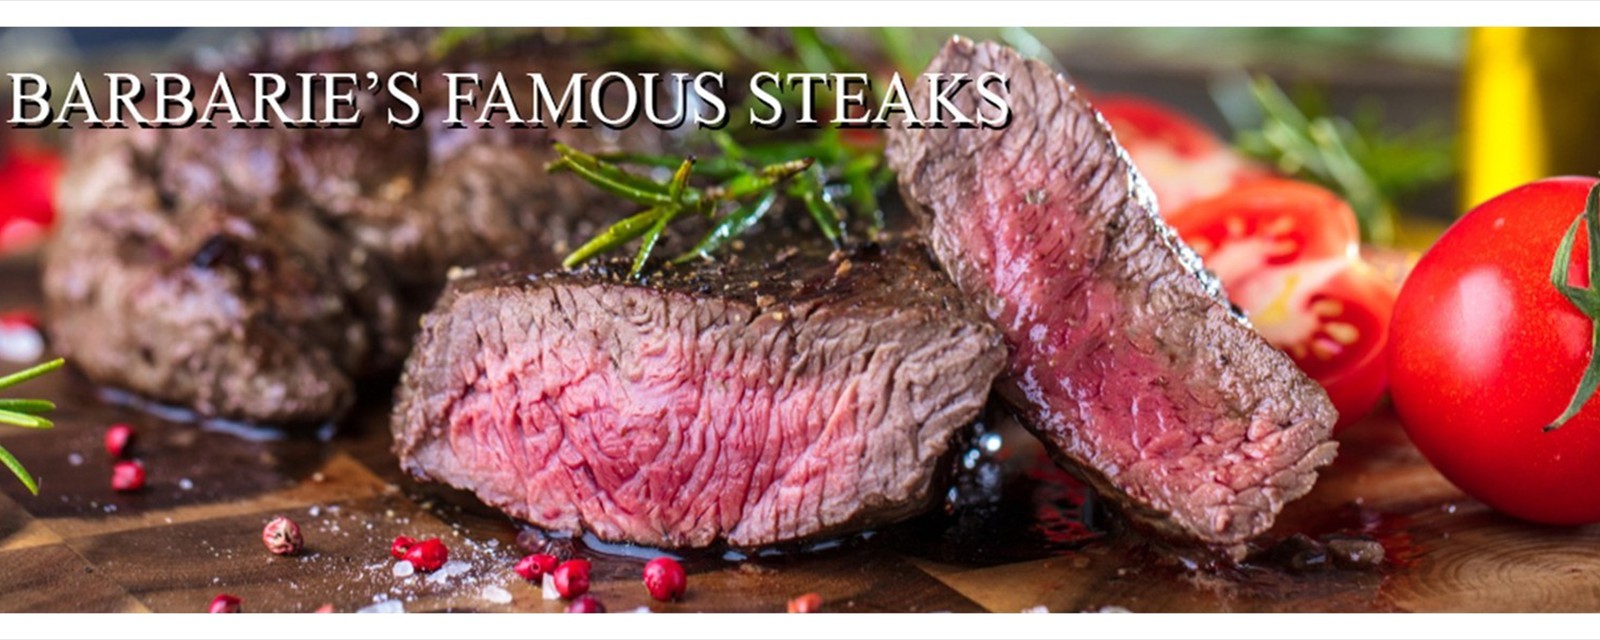 steak5